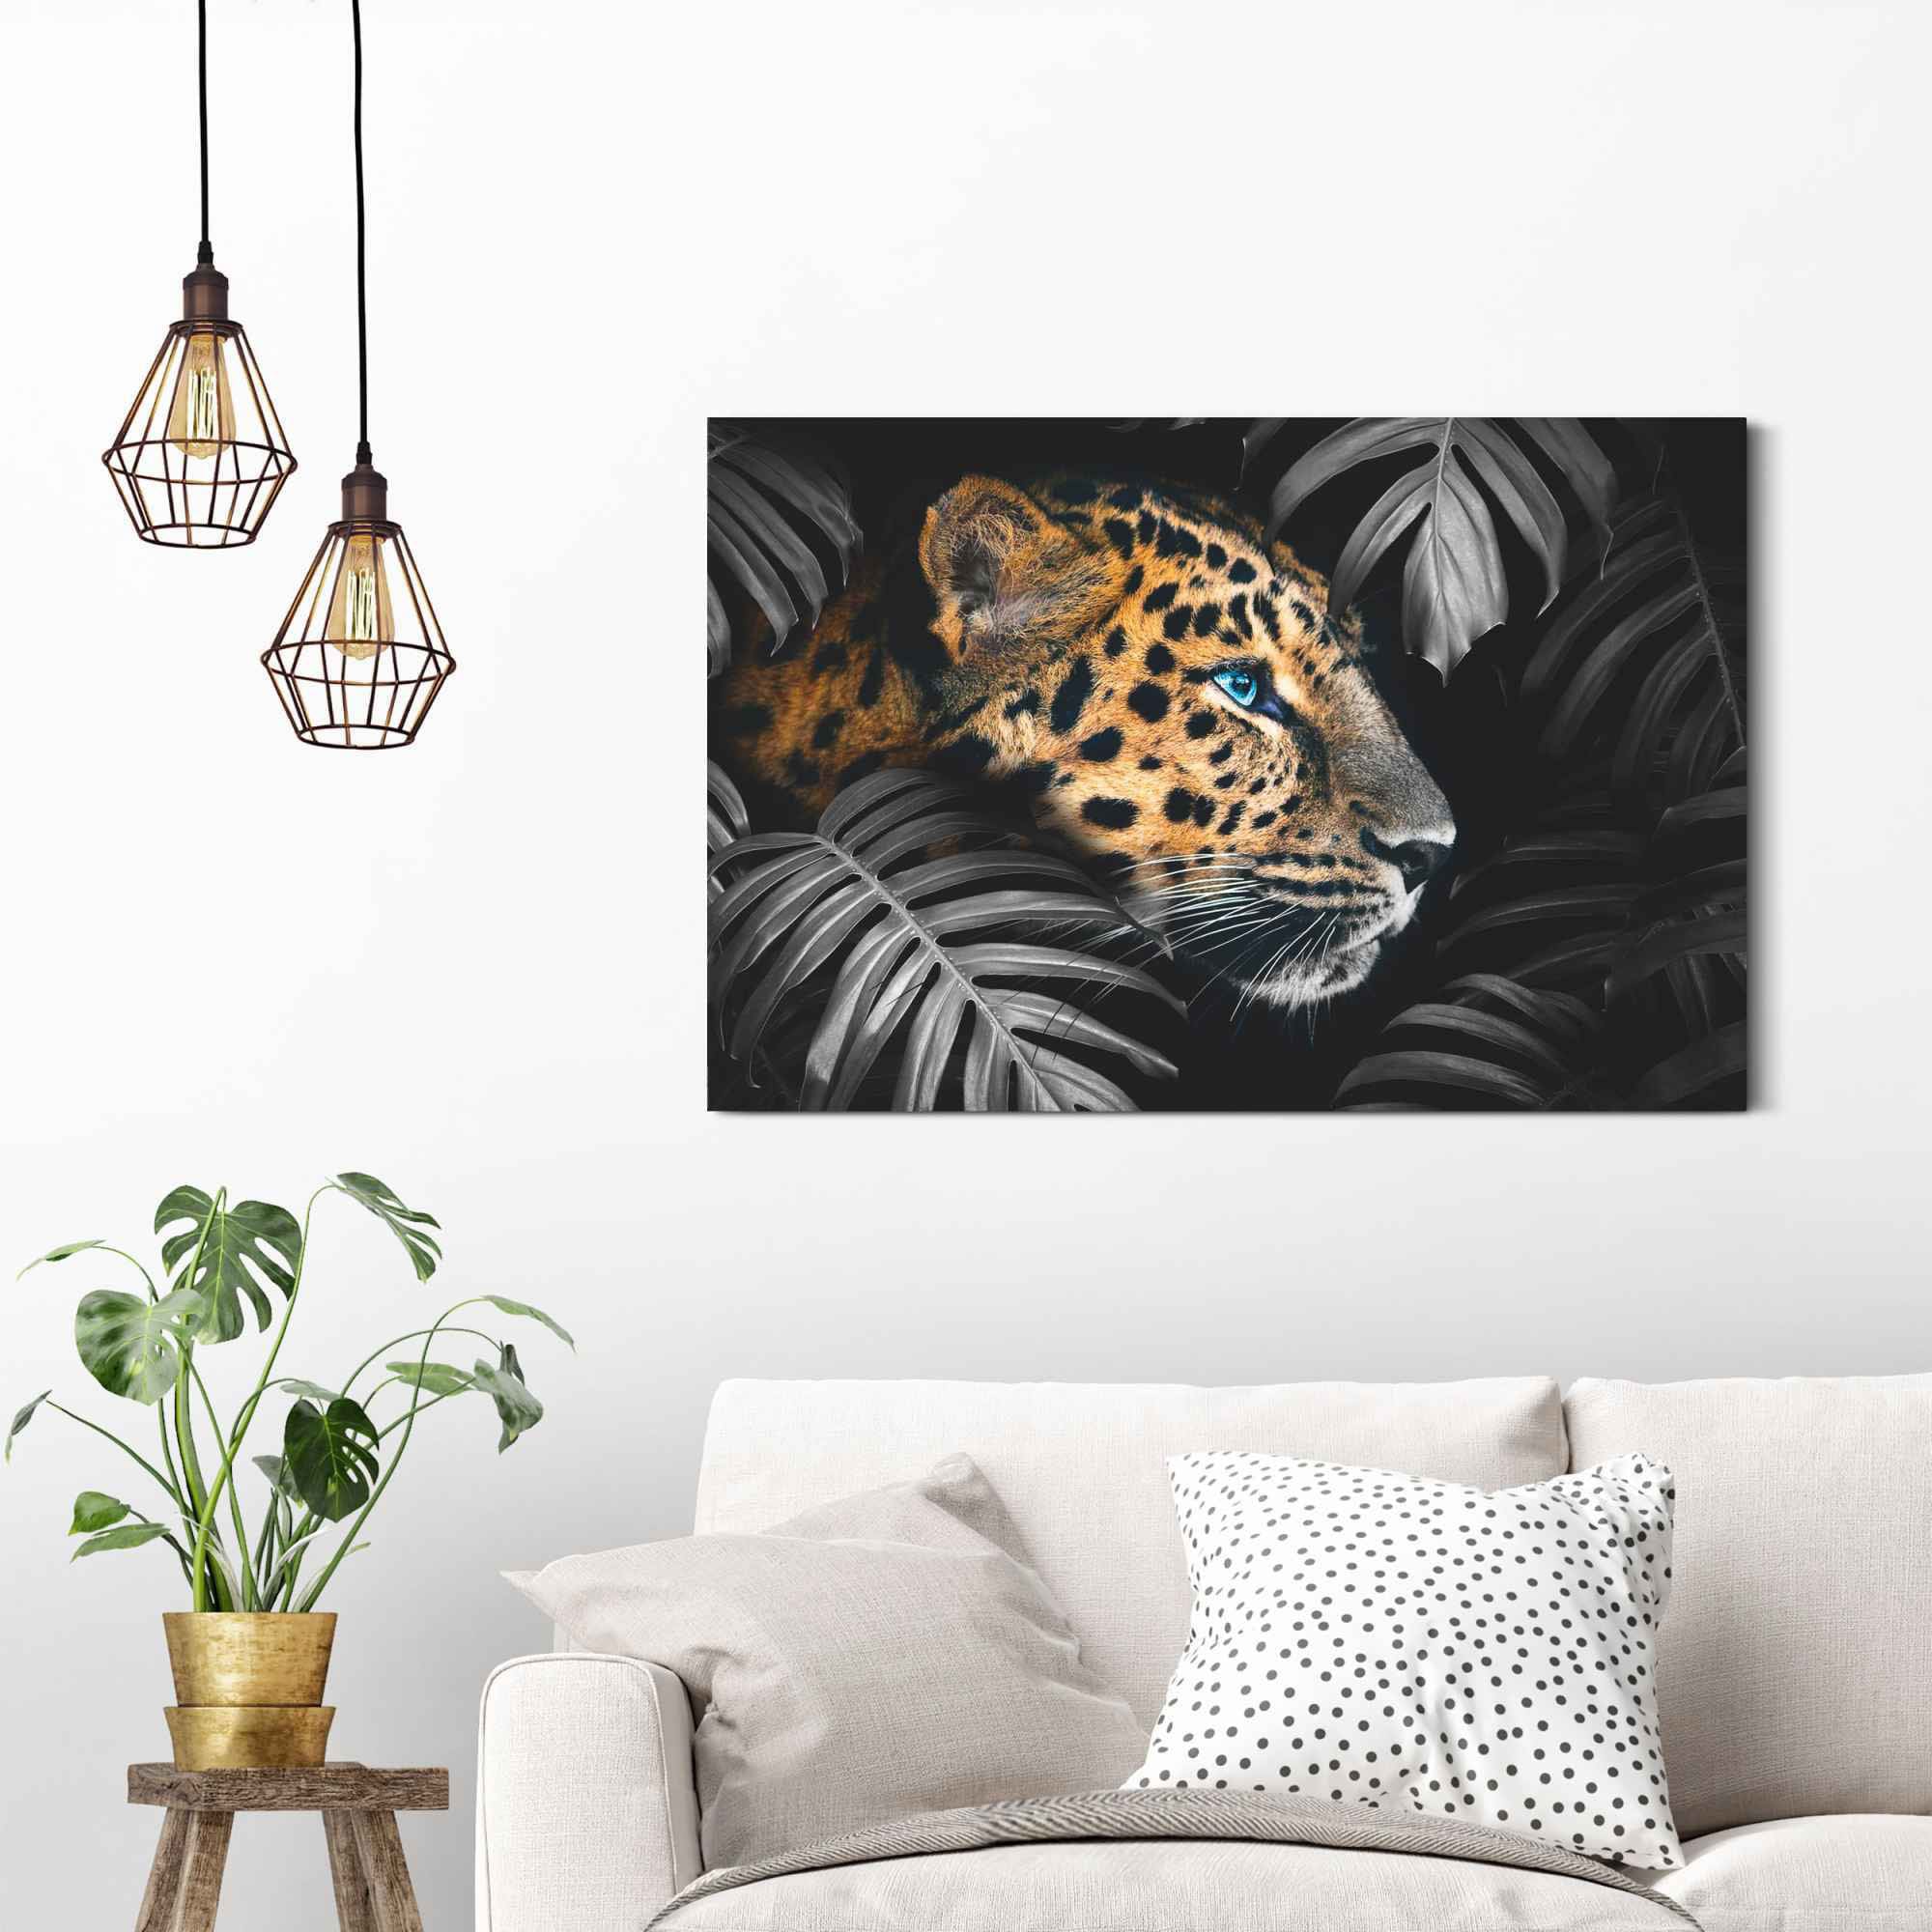 Leopard (1 »Wandbild - Jungle St.) Wandbild Leopard, Pflanze Reinders! - Tiermotiv«,